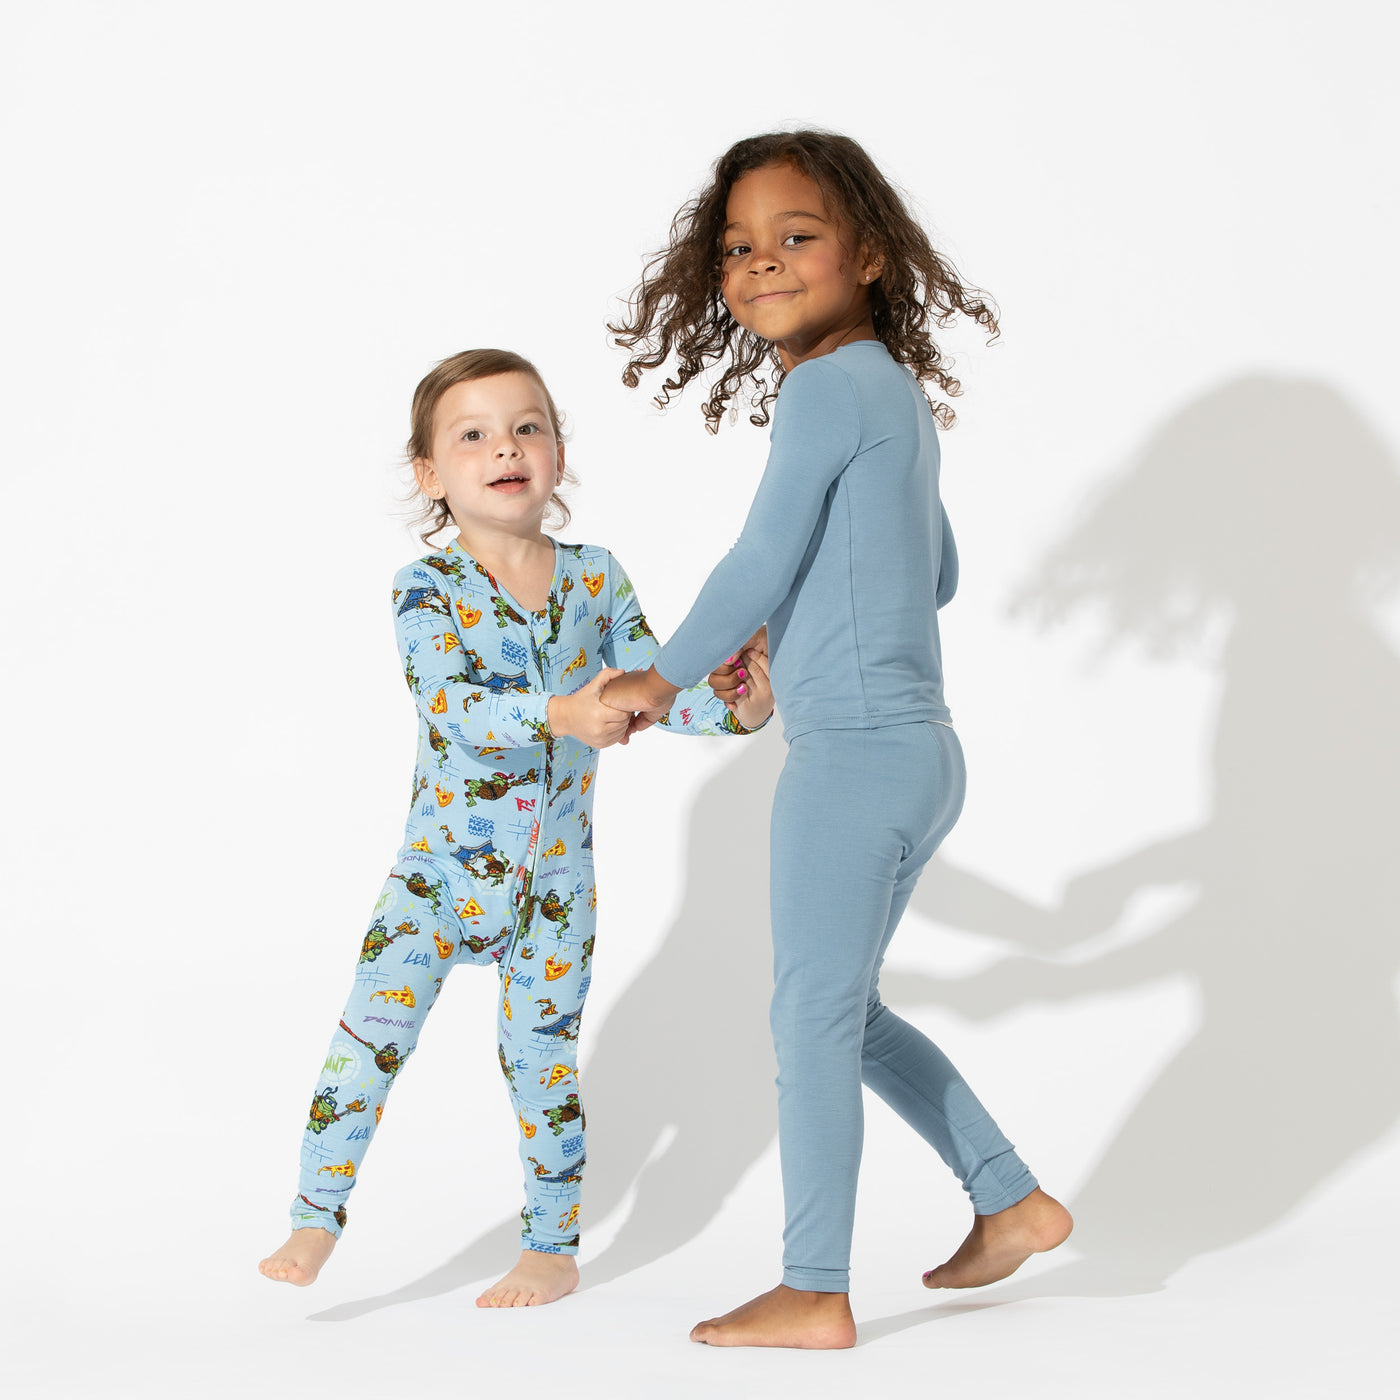 Nickelodeon Ninja Turtles Boys Pajamas Long Sleeve TMNT Kids Sleepwear 2  Piece Set